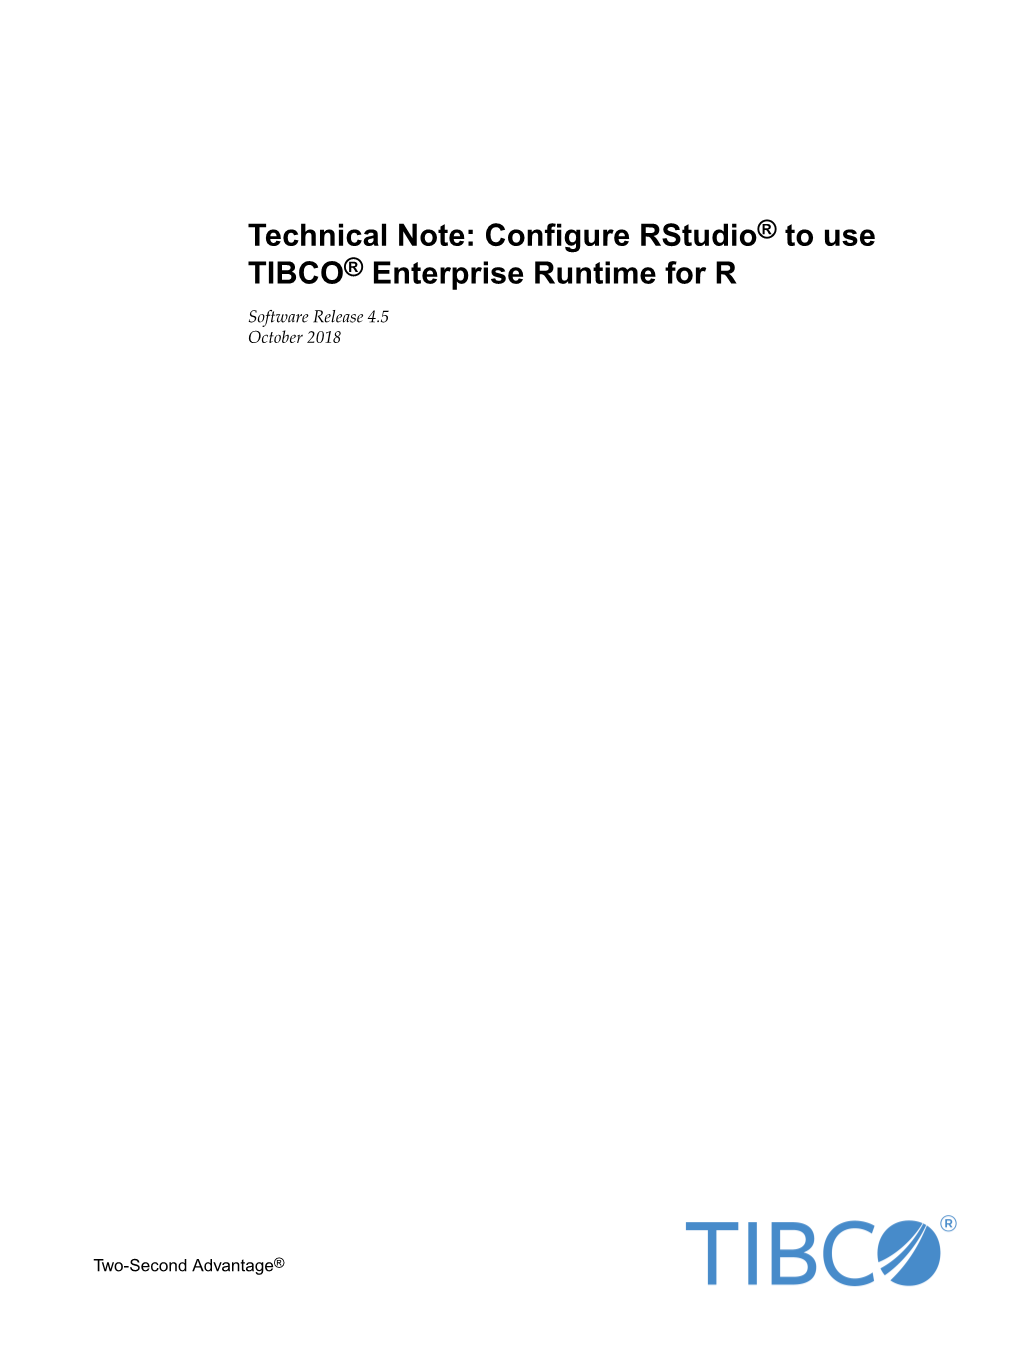 Configure Rstudio® to Use TIBCO® Enterprise Runtime for R